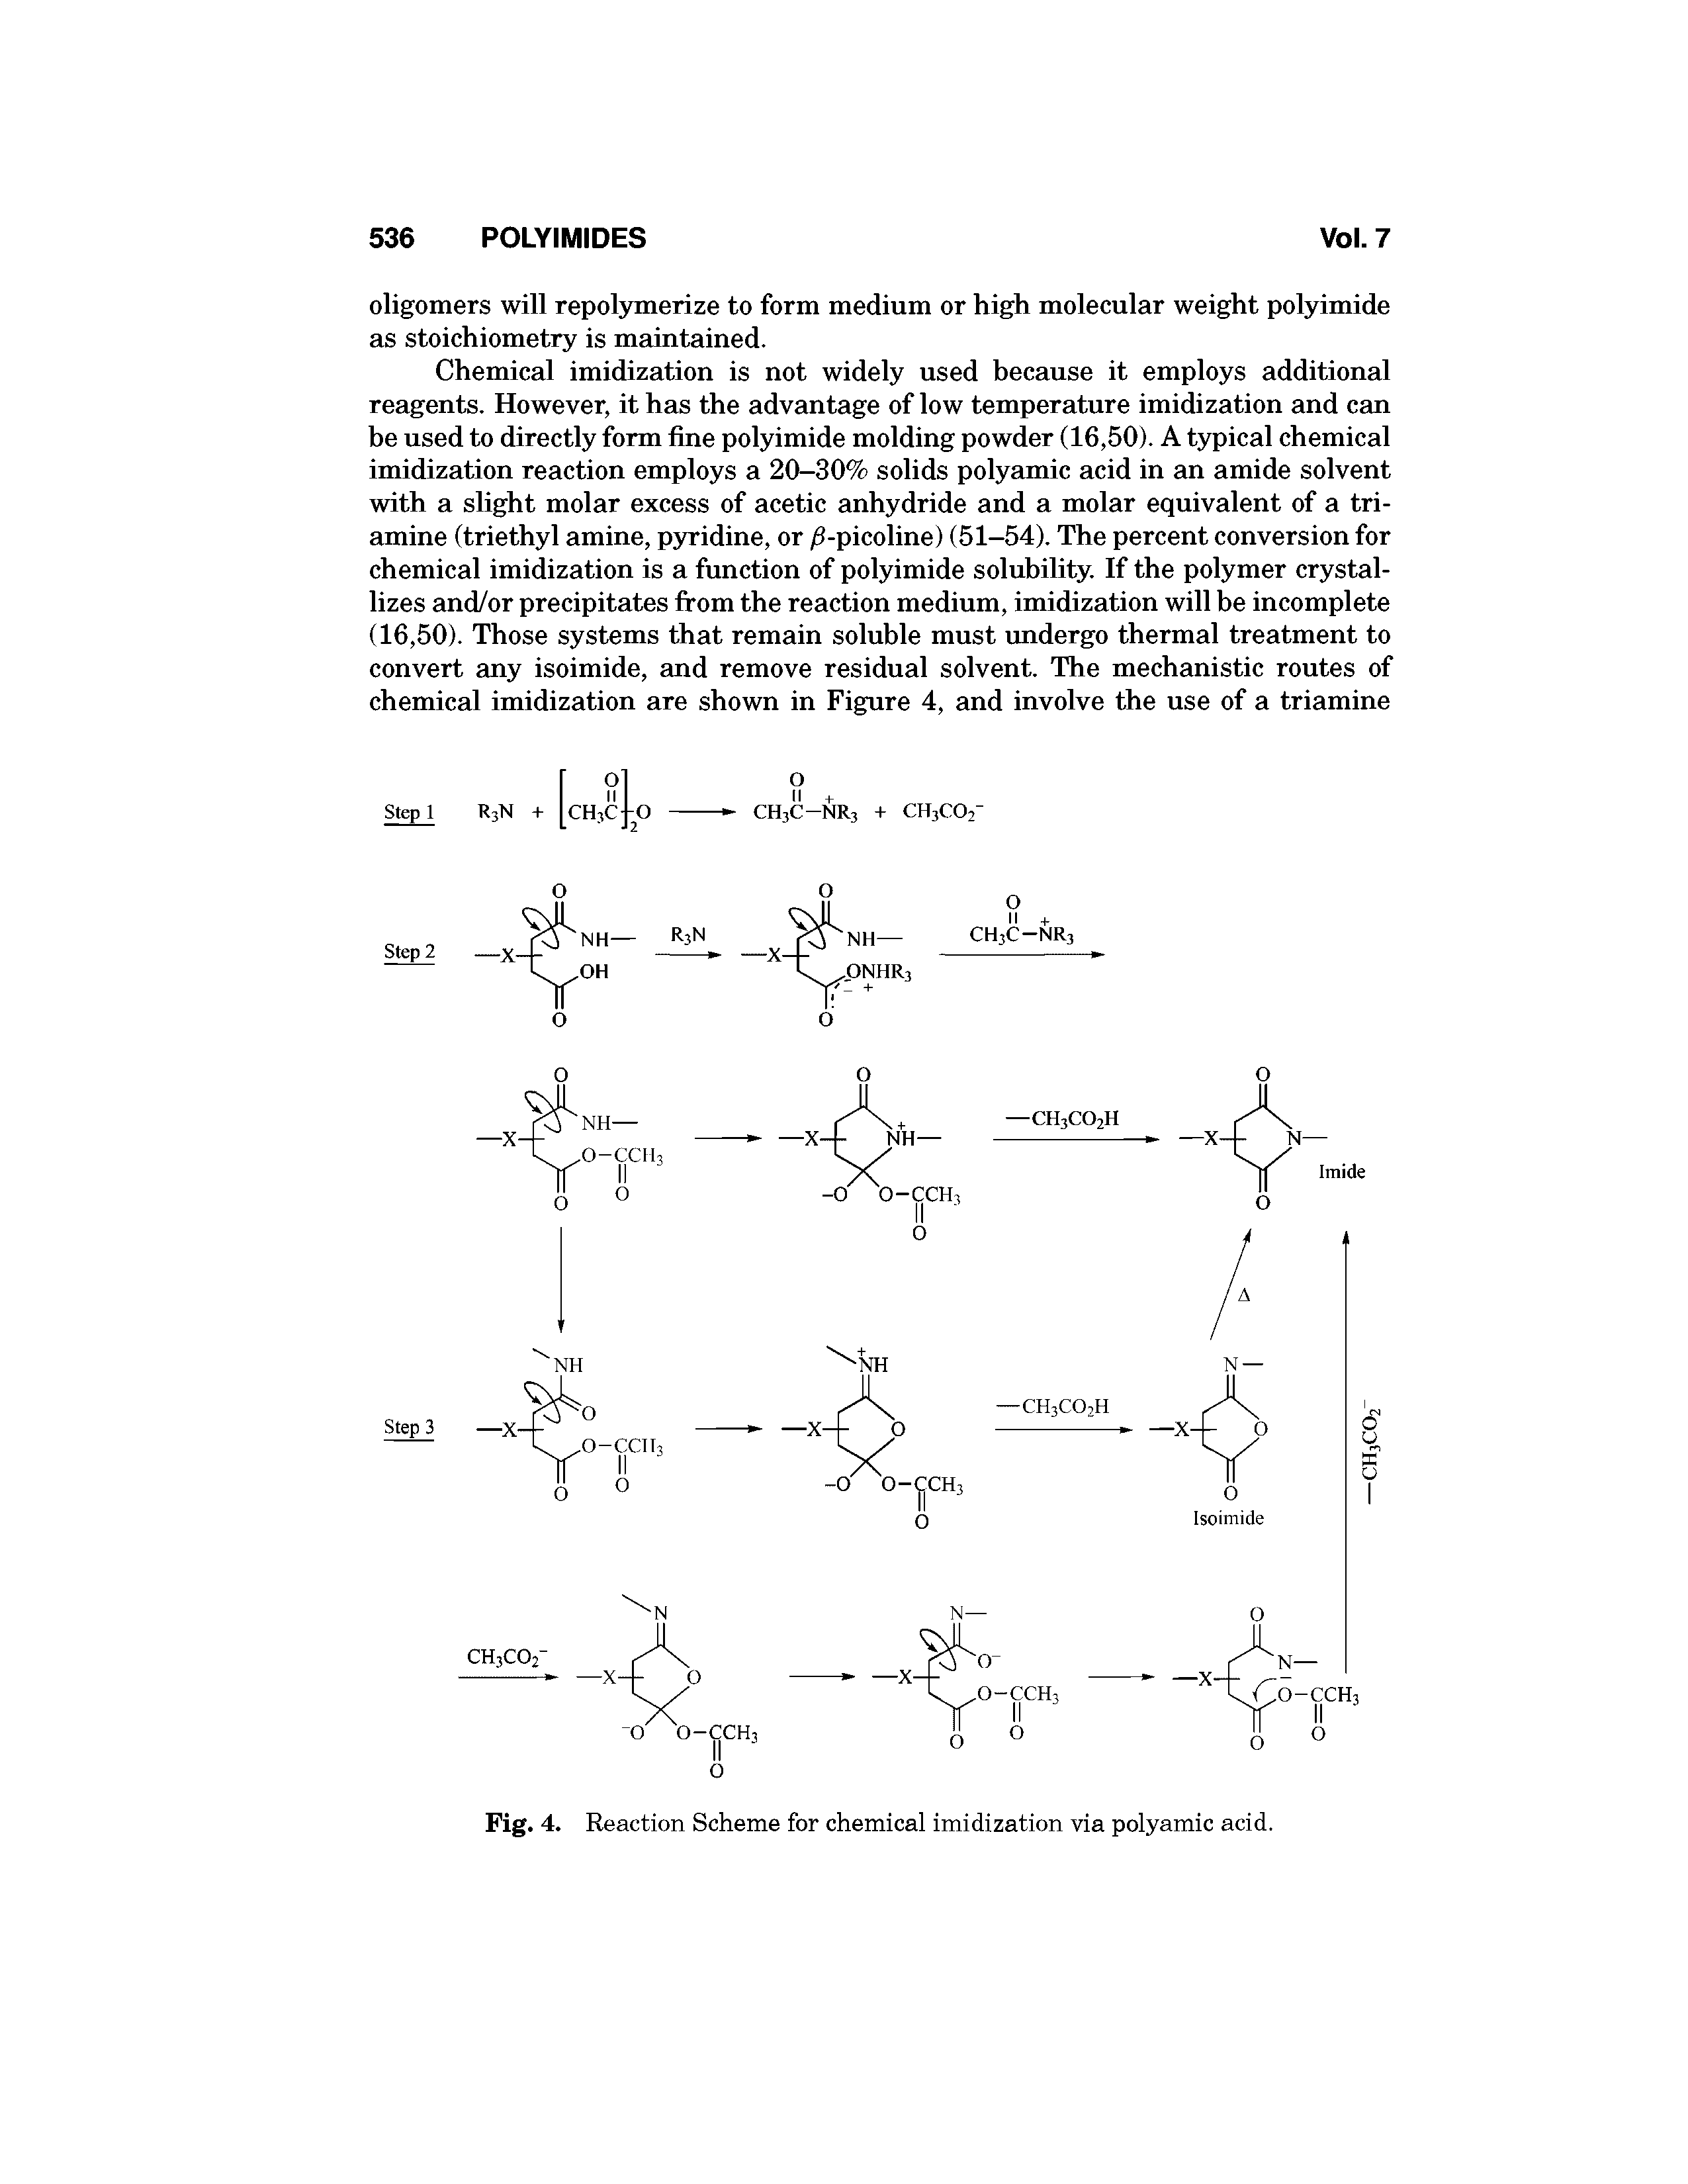 Fig. 4. Reaction Scheme for chemical imidization via polyamic acid.